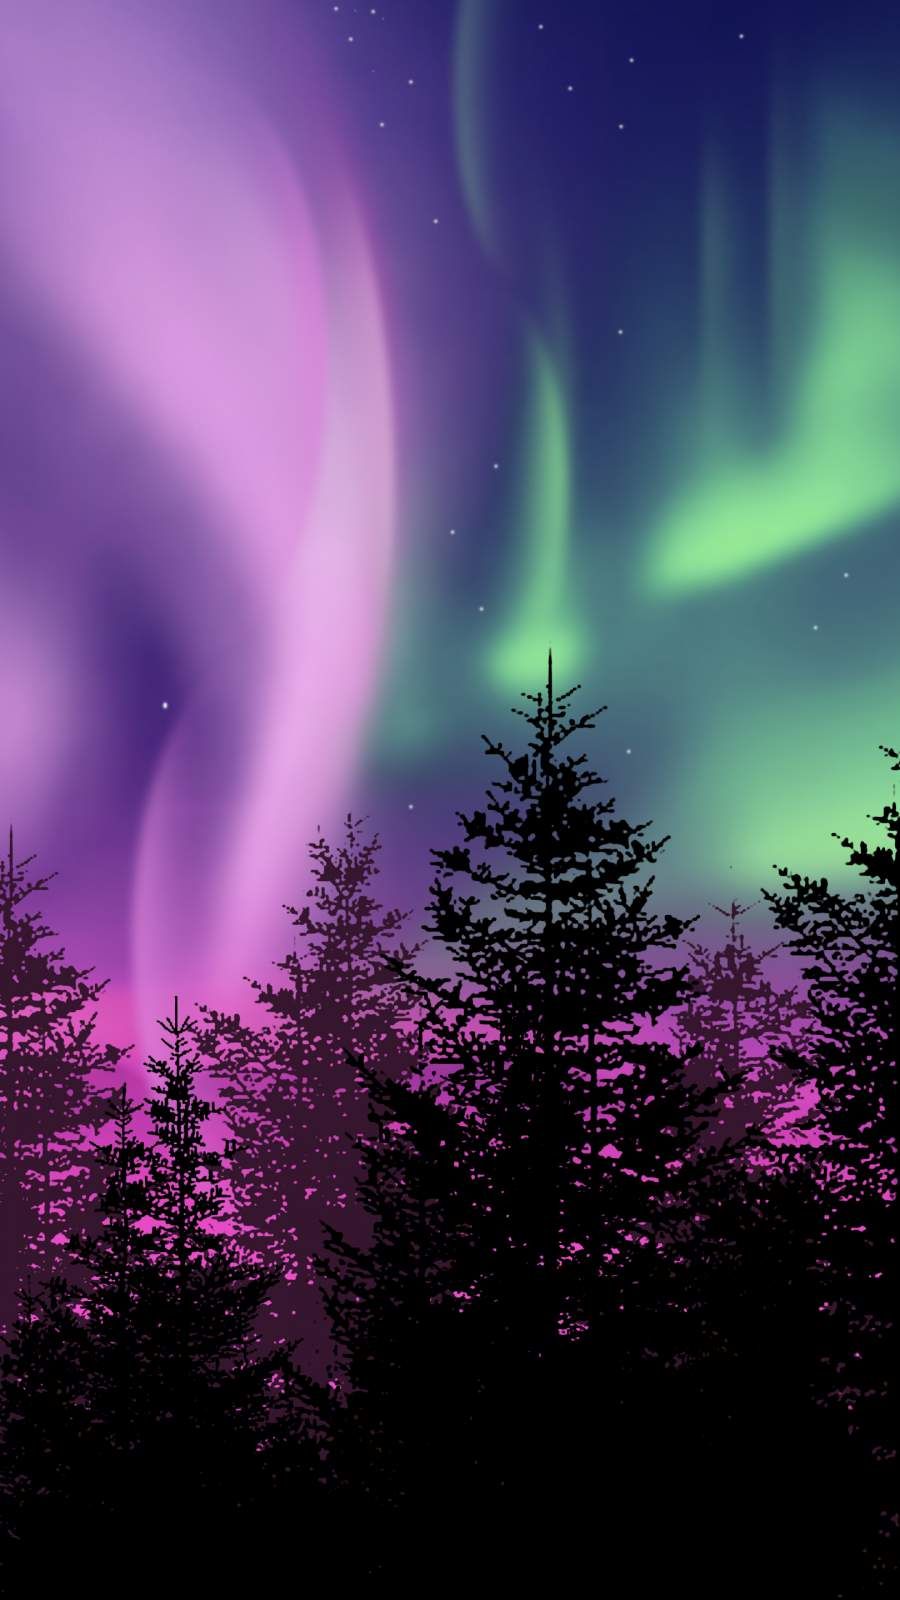 Aurora Borealis Night Sky Scenery 4K Phone iPhone Wallpaper 6070b